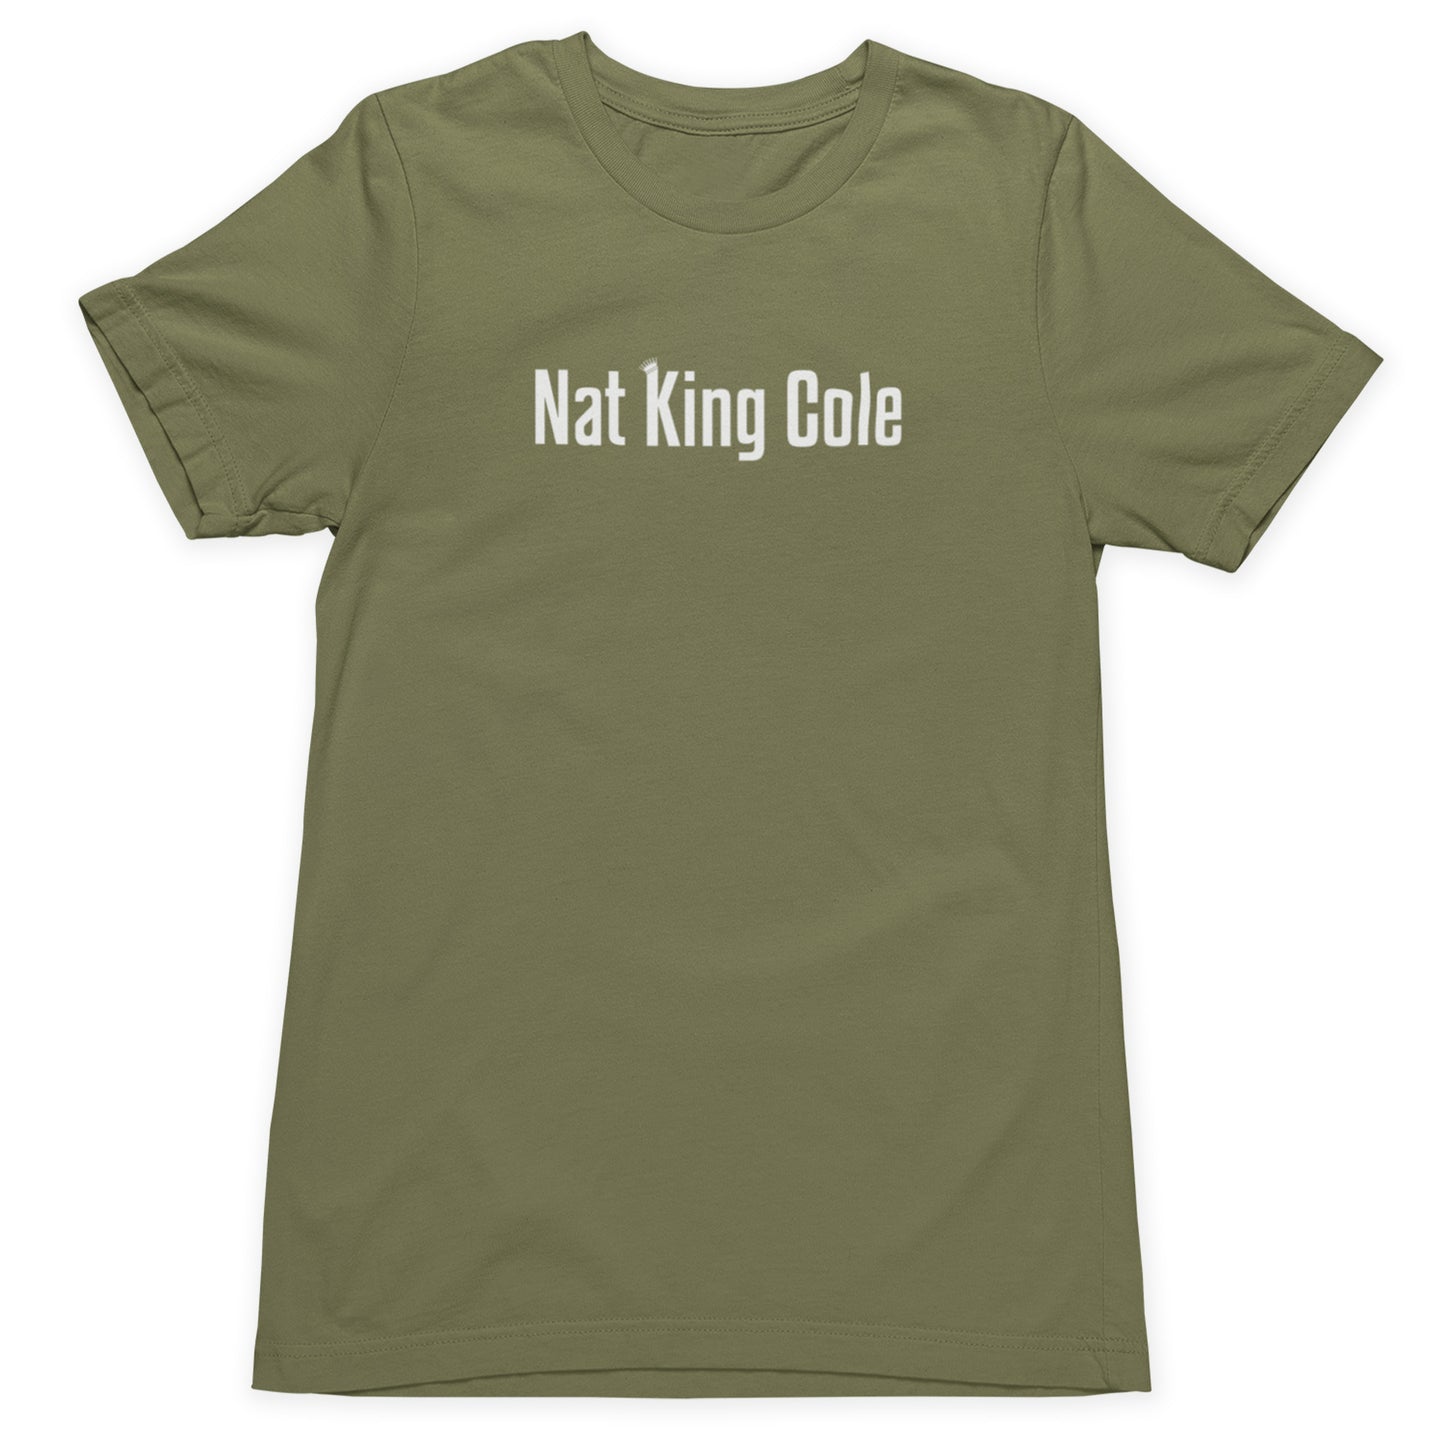 Nat King Cole T-Shirt - Olive